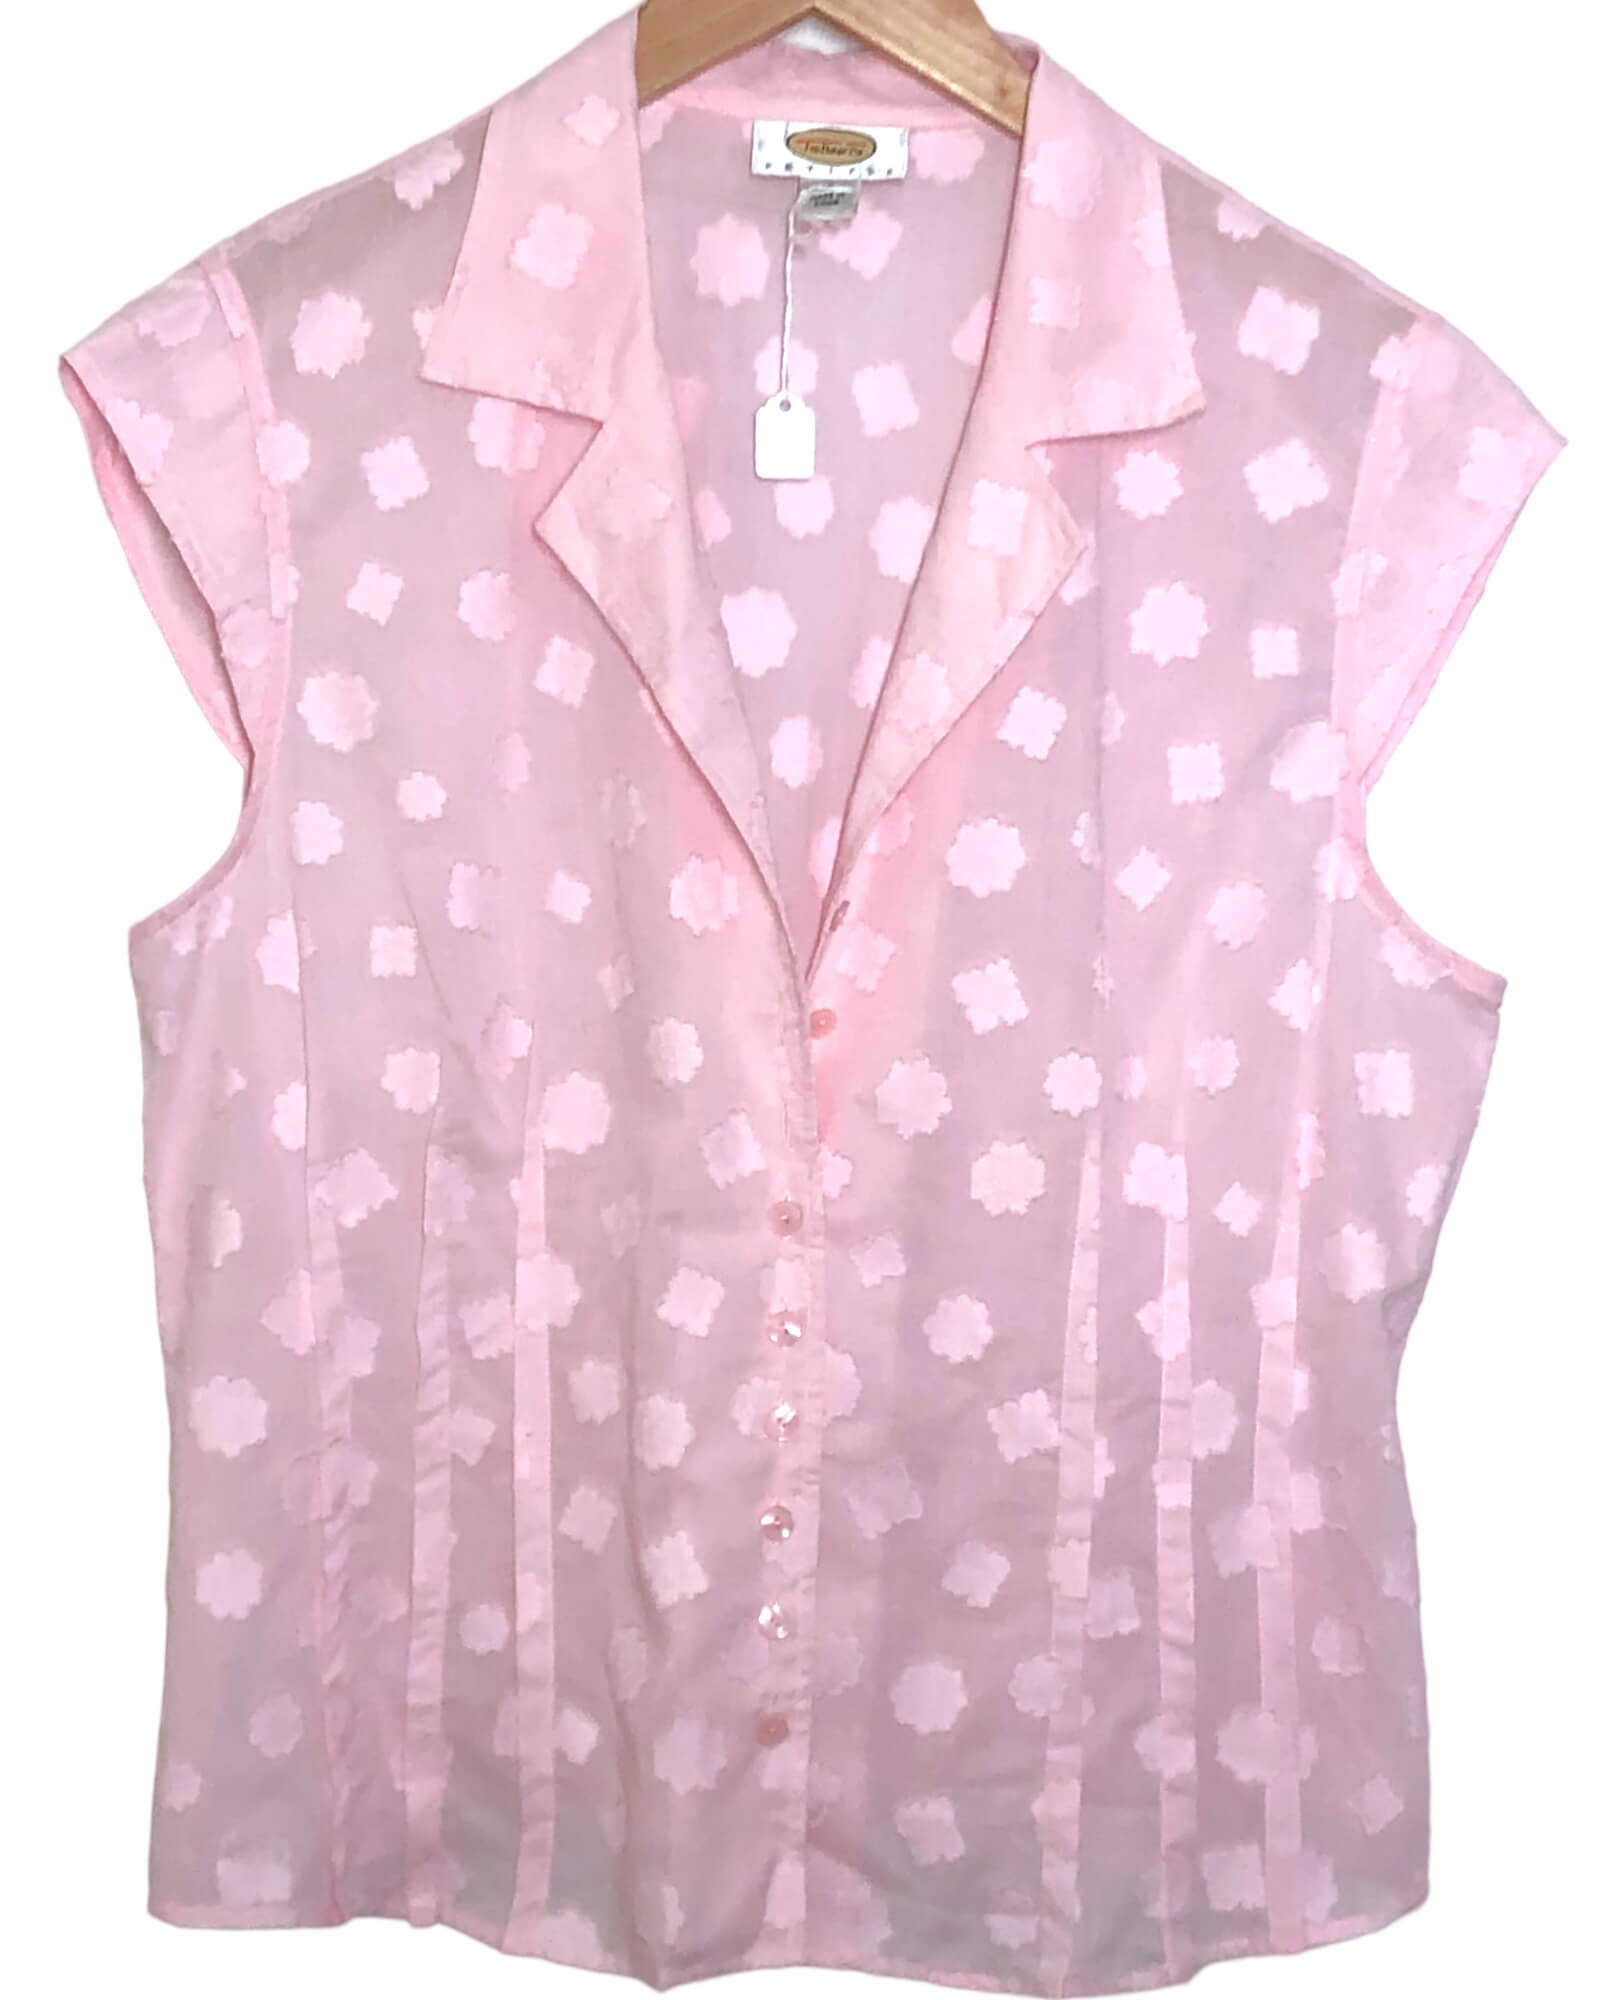 Cool Summer TALBOTS pink semi sheer floral shirt